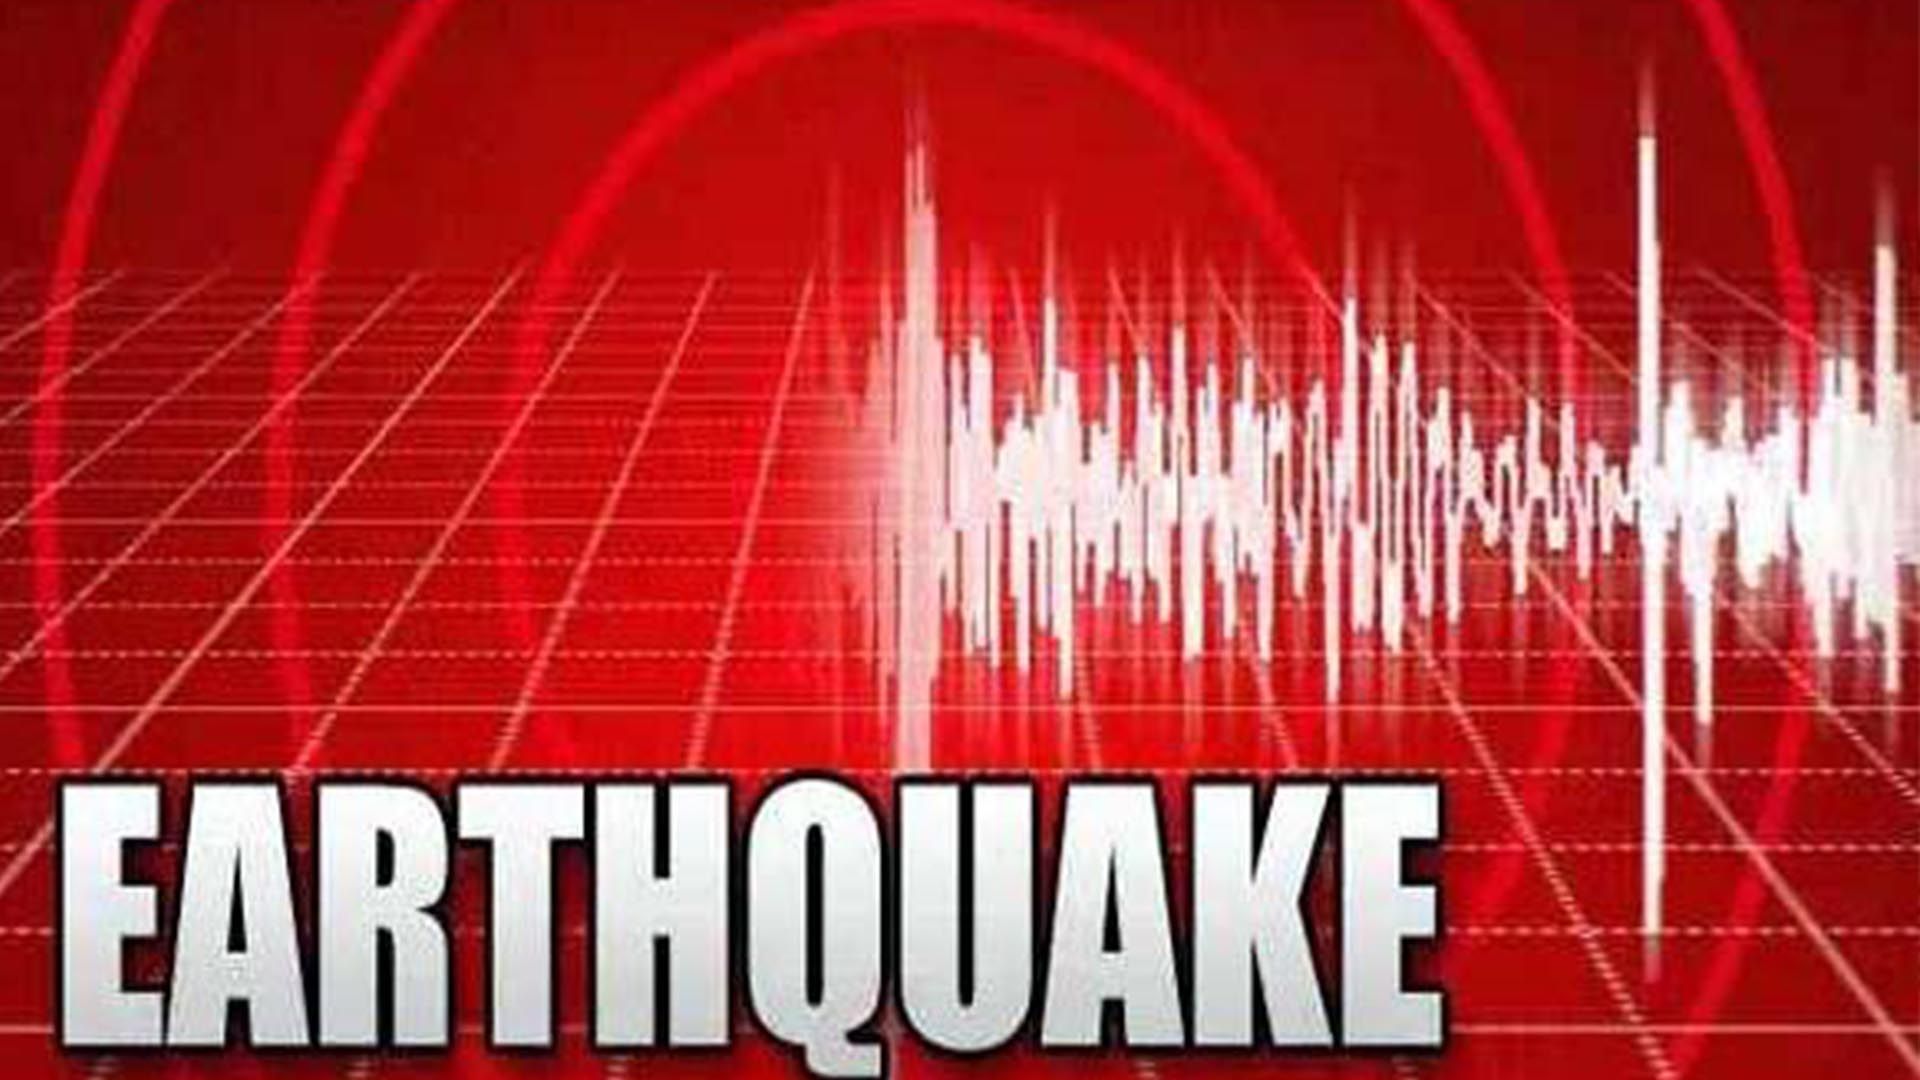 7.7 magnitude earthquake shakes New Caledonia